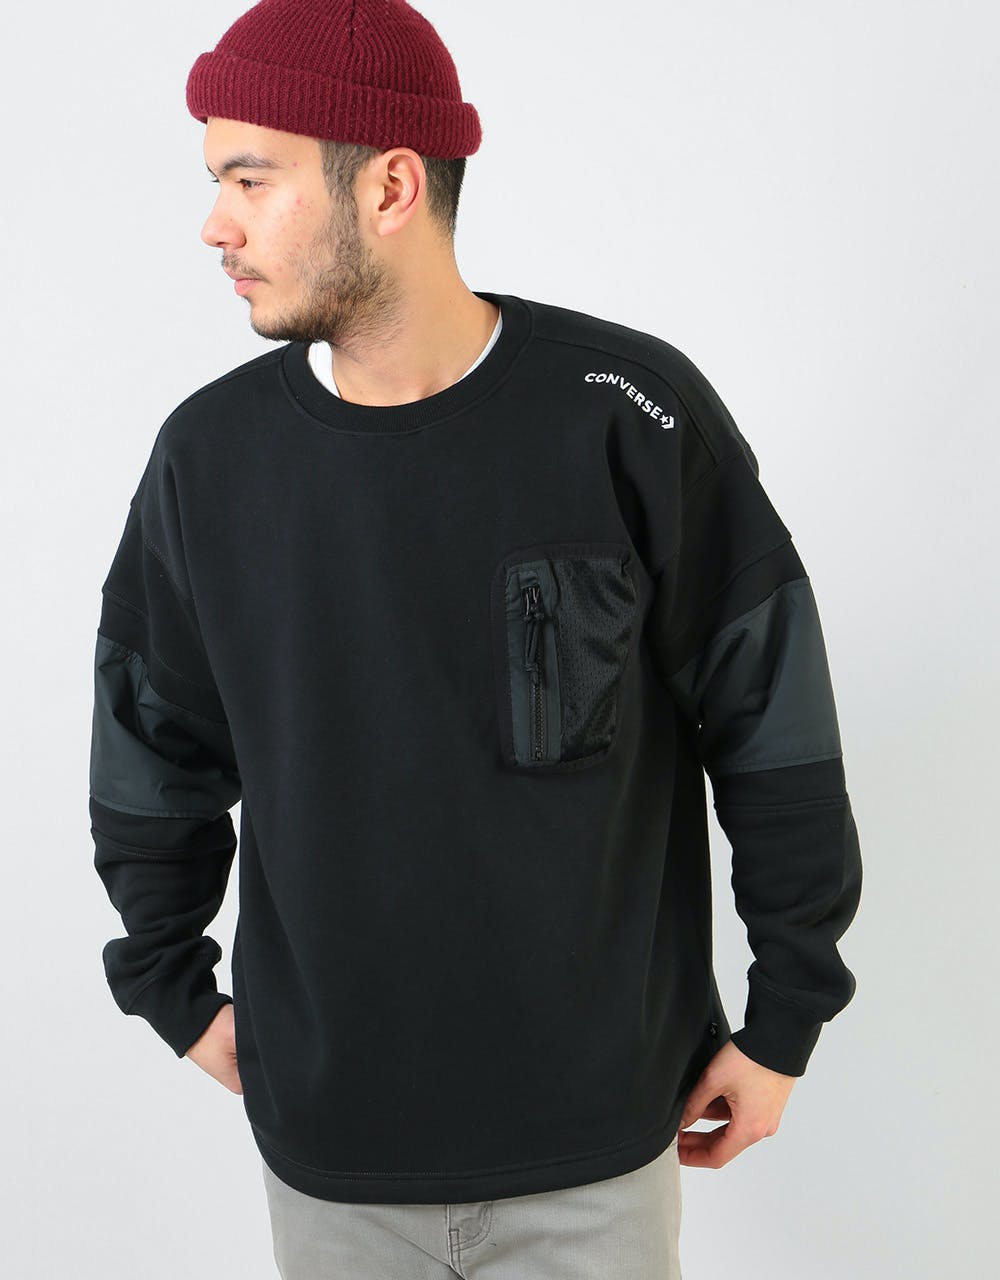 Converse Mixed Media Ripstop Sweatshirt - Black